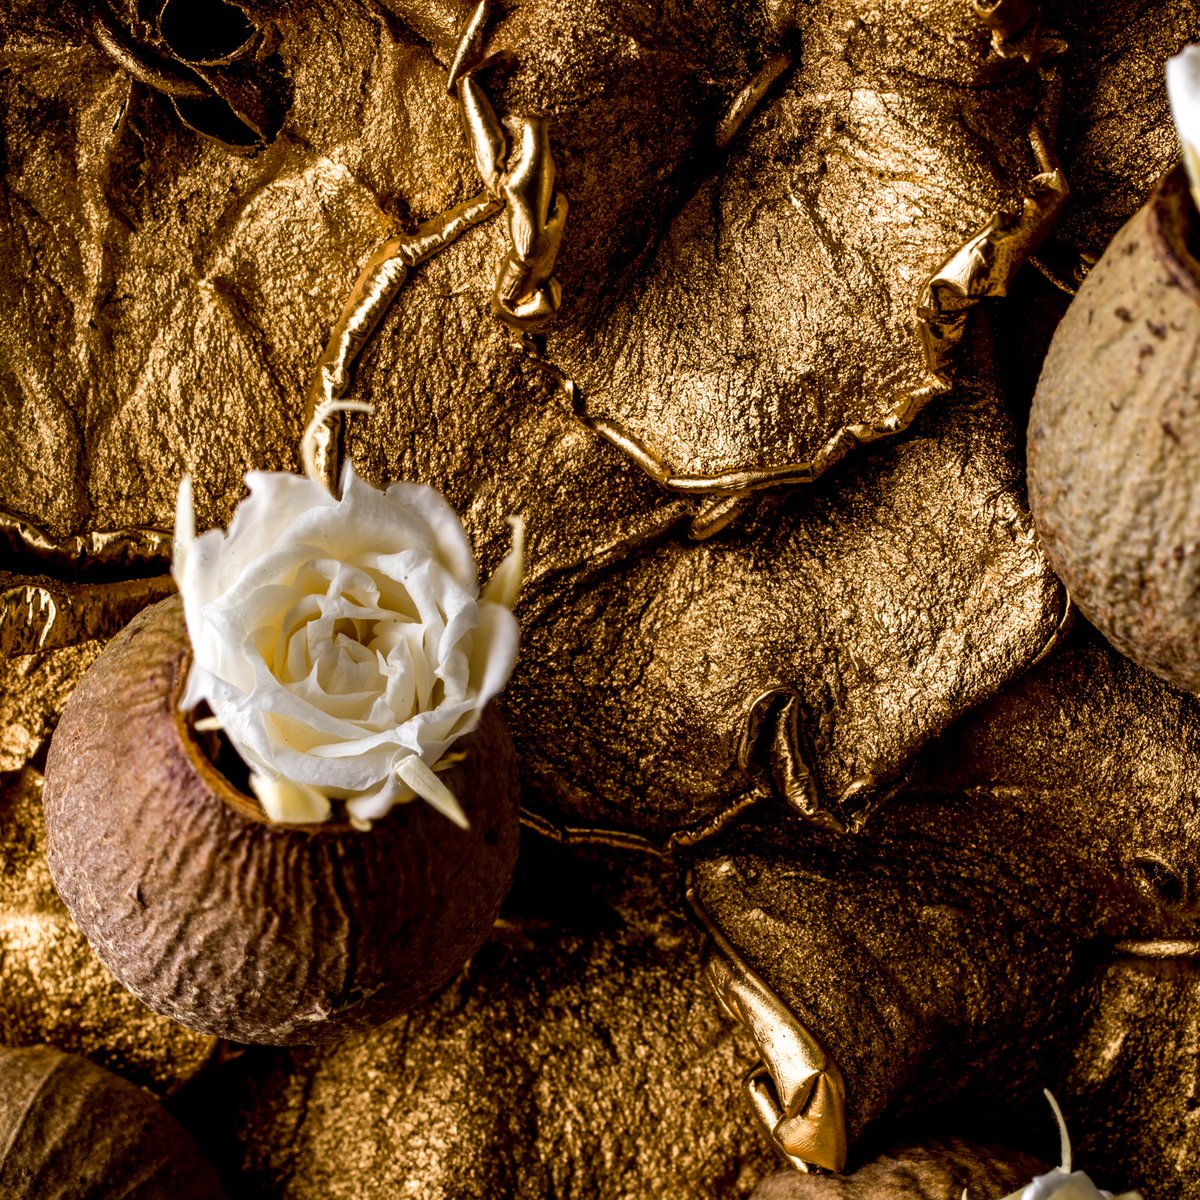 Eucalyptus seed pods with white roses. #nicolaibergmann #ニコライバーグマン @thenicolaibergmann